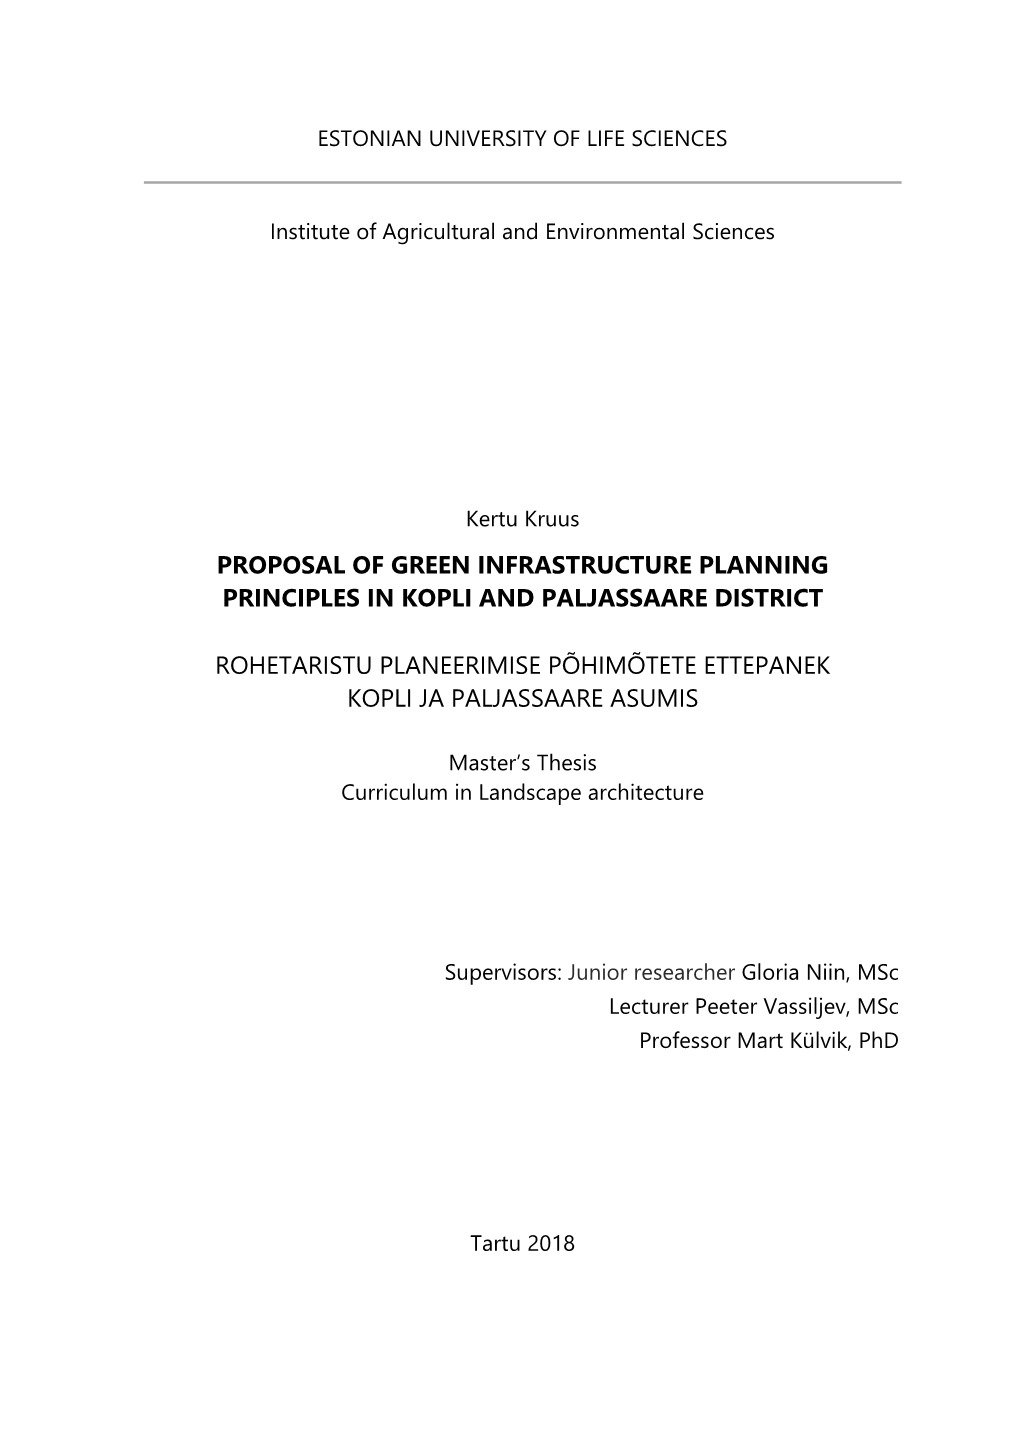 Proposal of Green Infrastructure Planning Principles in Kopli and Paljassaare District